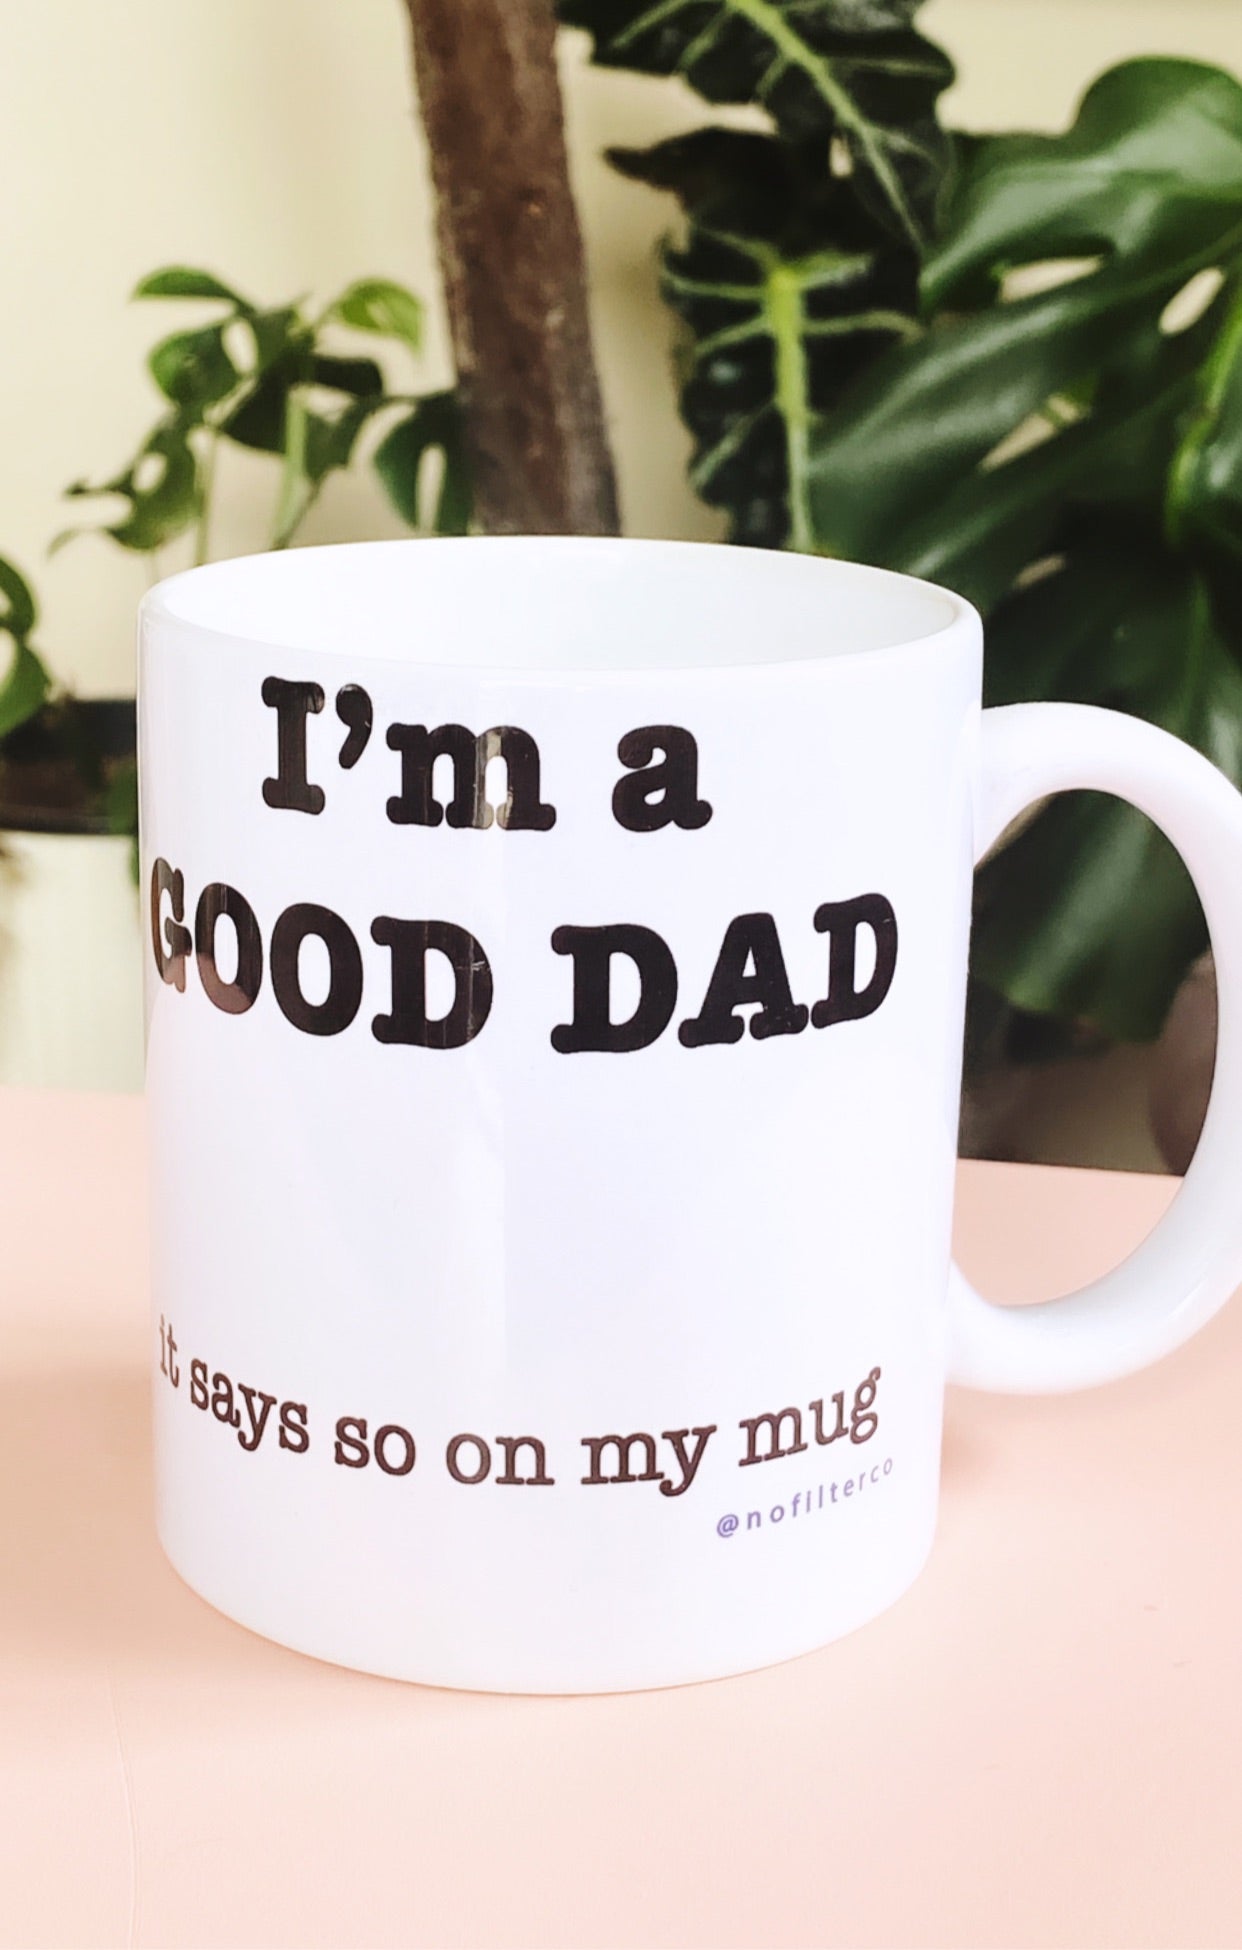 Good dad mug